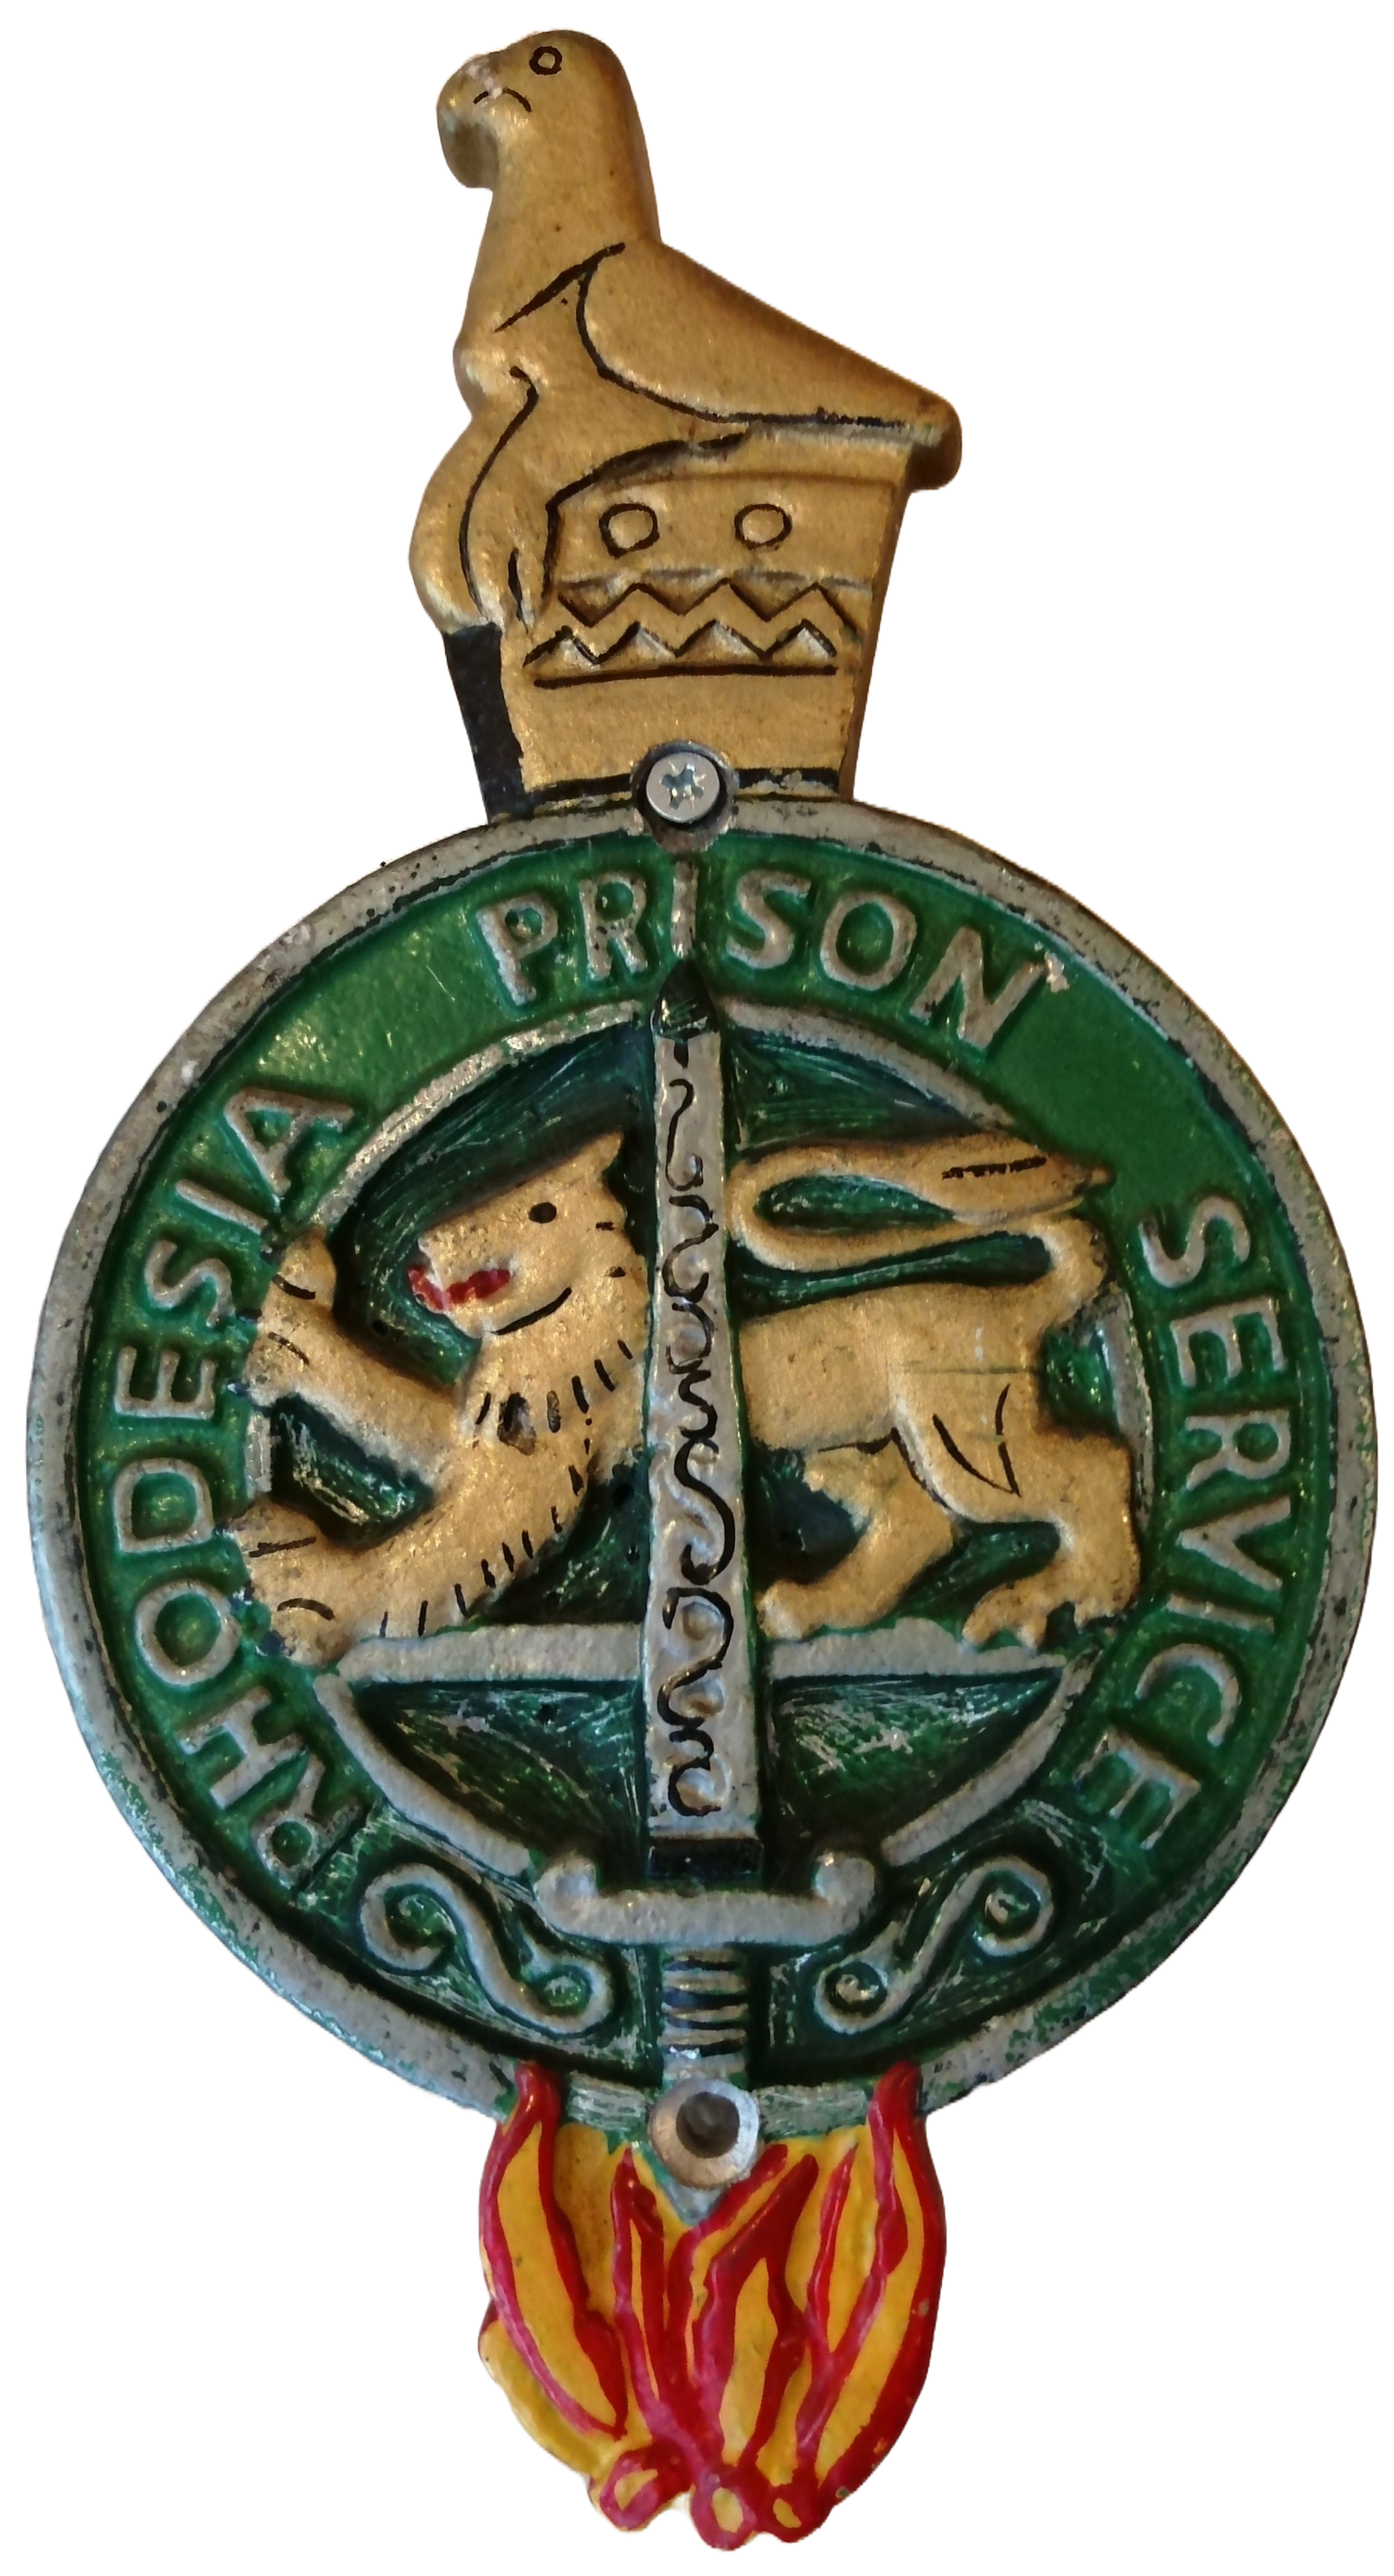 Rhodesian Prison Services